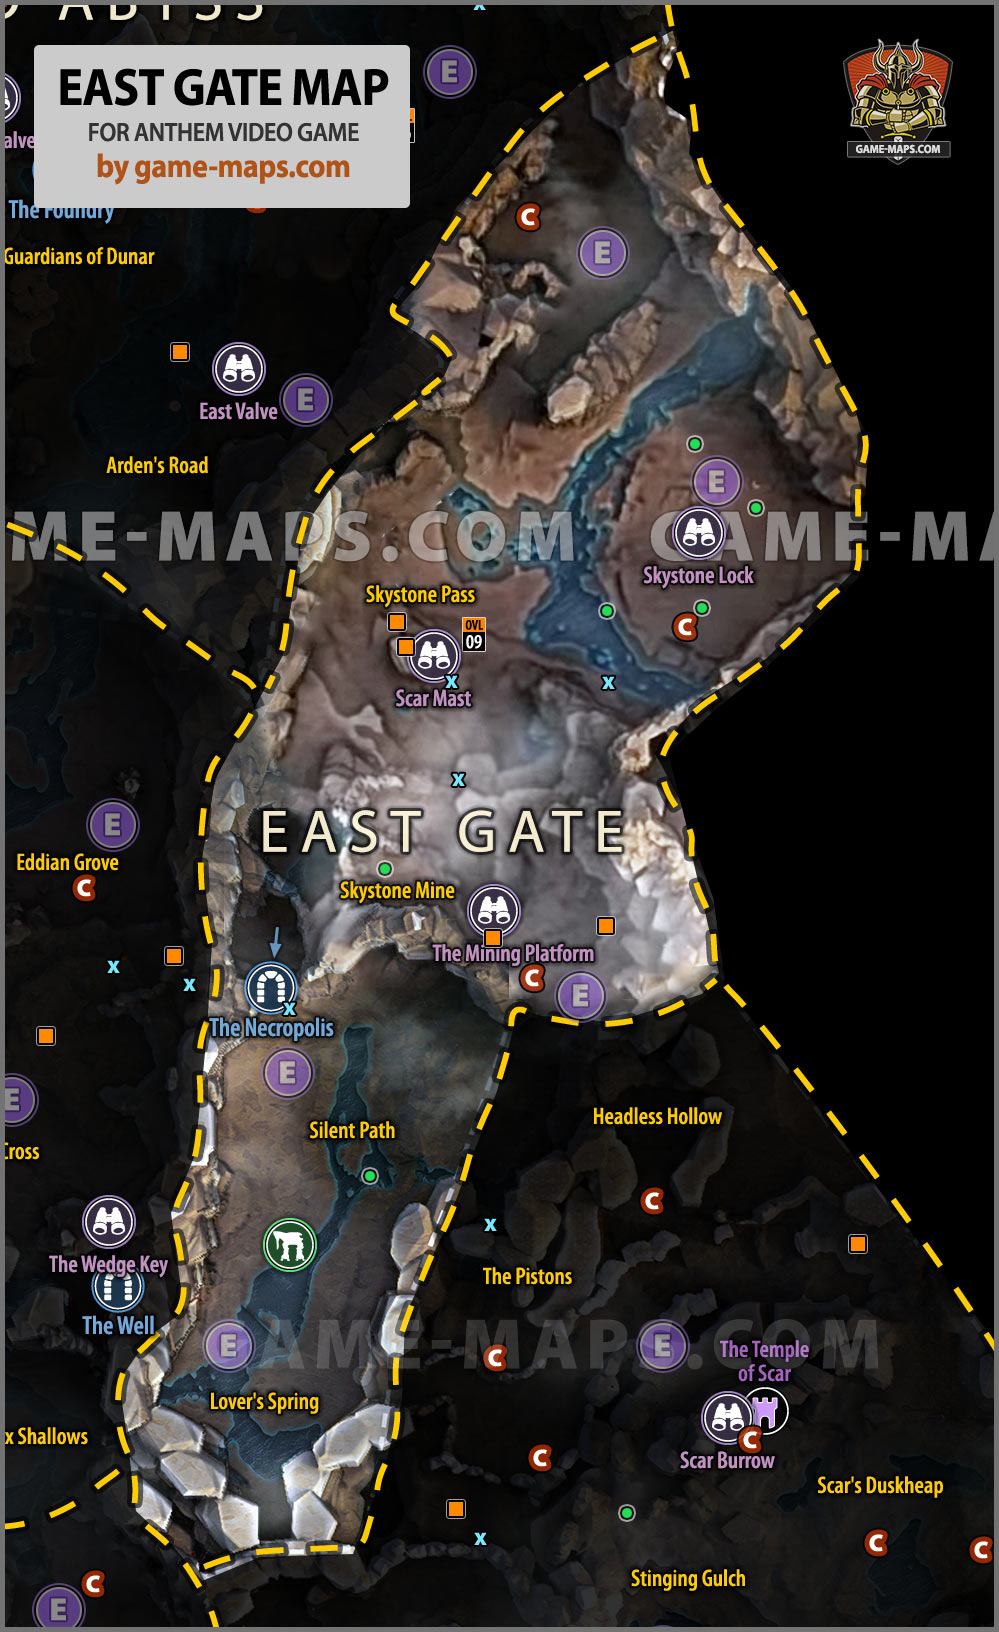 East Gate Map - Anthem